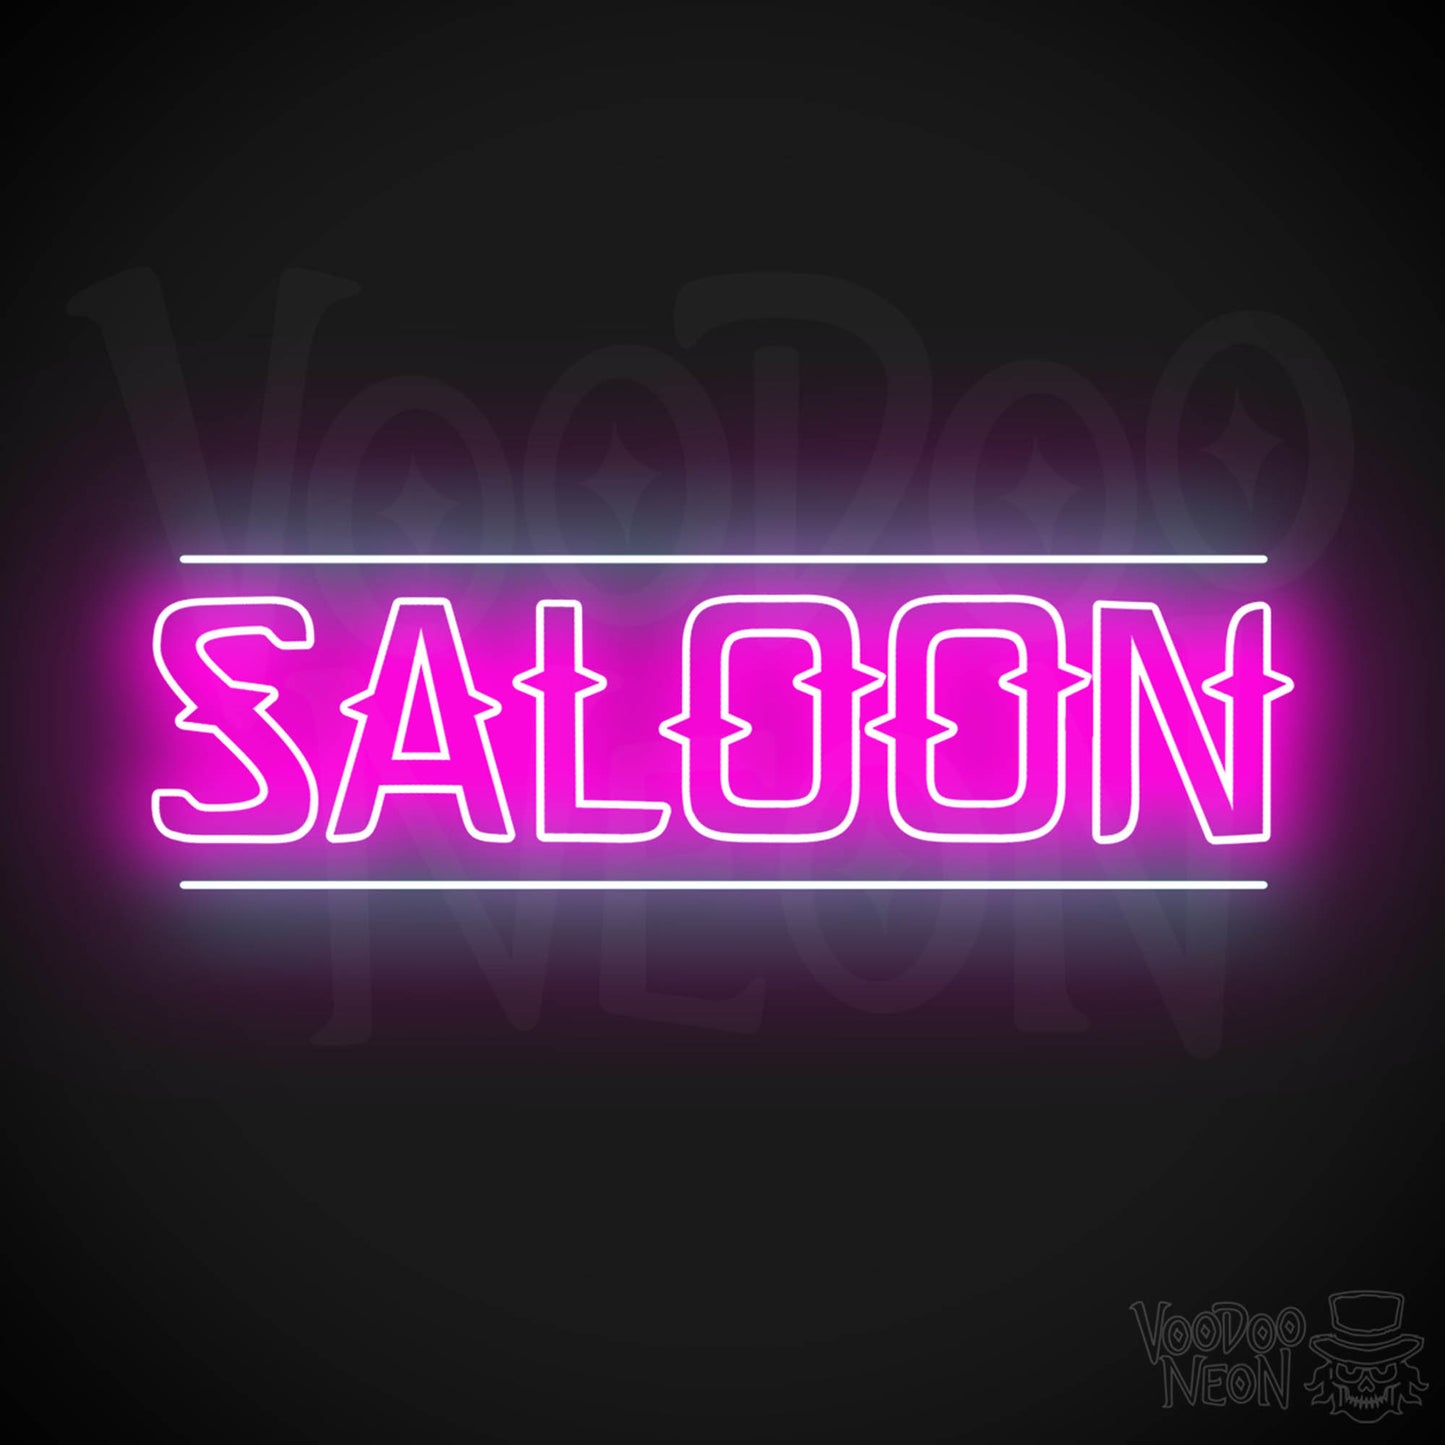 Saloon LED Neon - Multi-Color